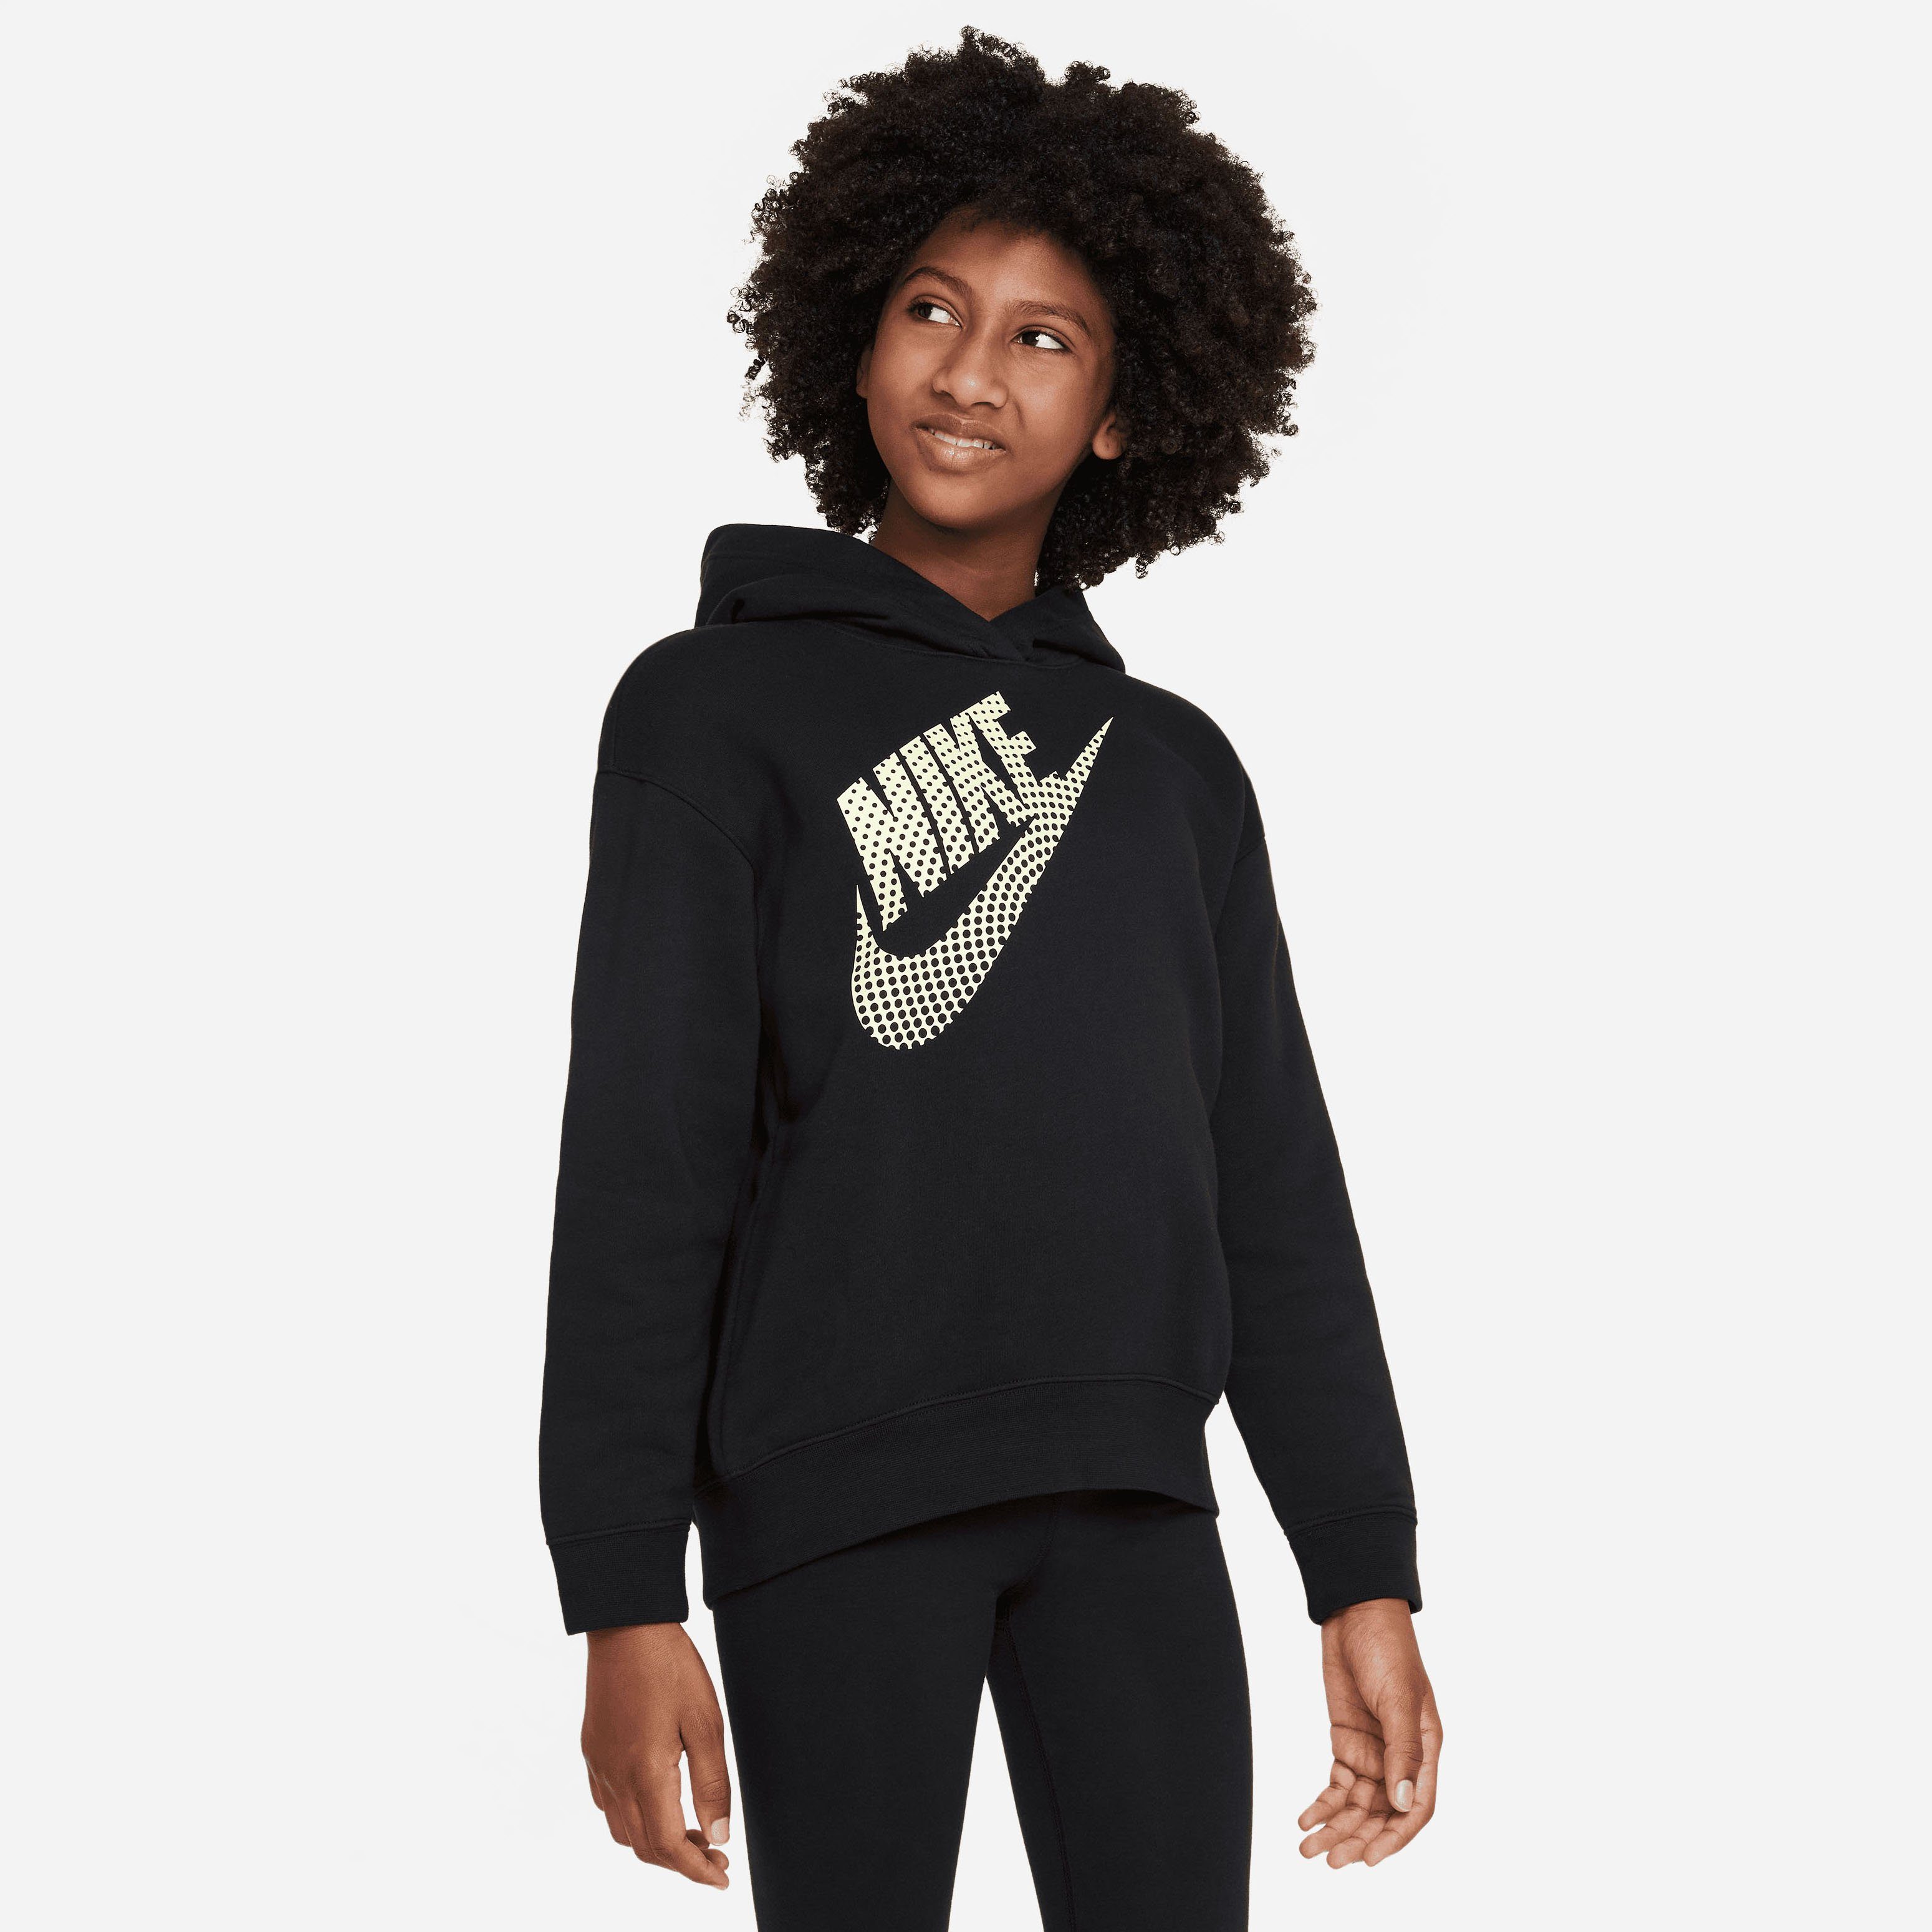 OS NSW BLACK G PO Sportswear HOODIE Kapuzensweatshirt Nike